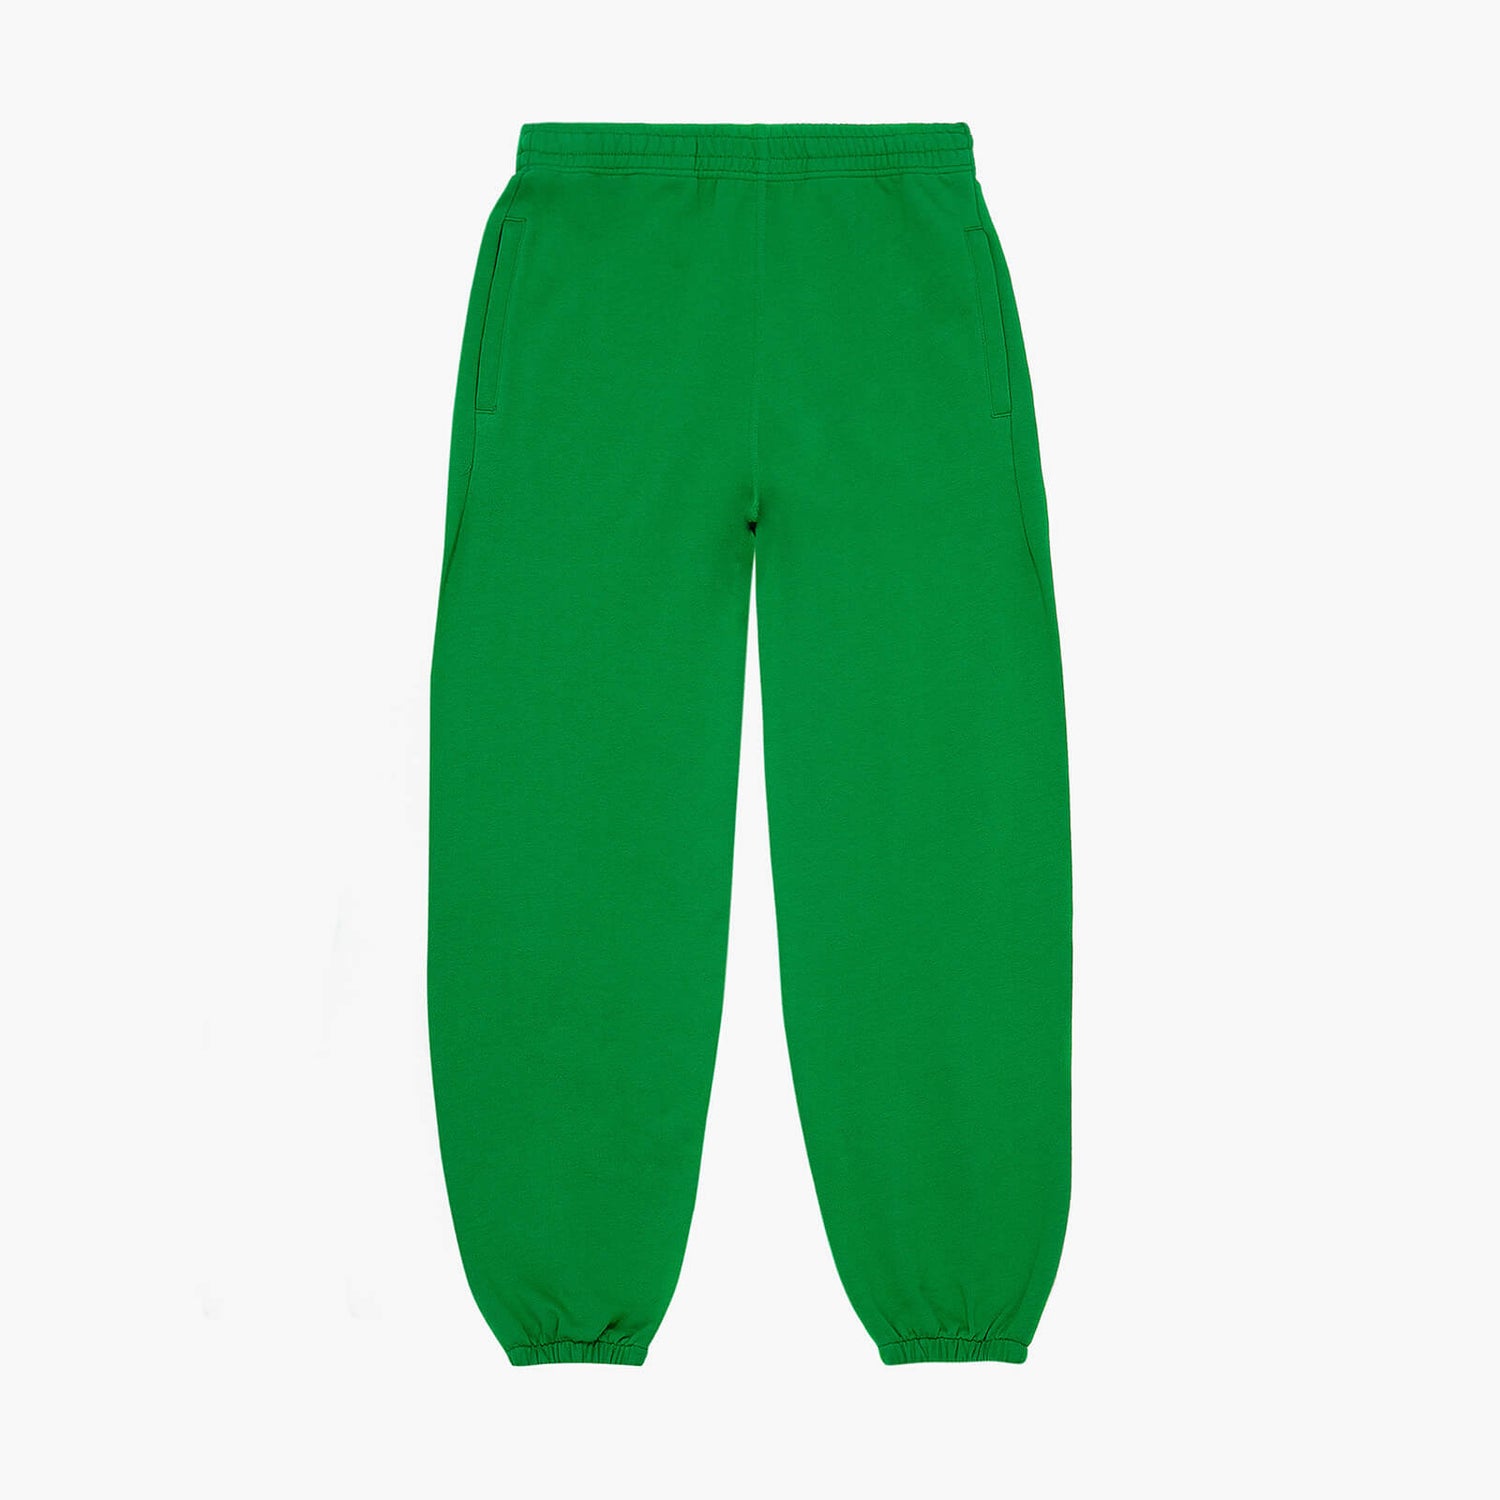 Les Girls Les Boys Loose Fit Track Pants Green